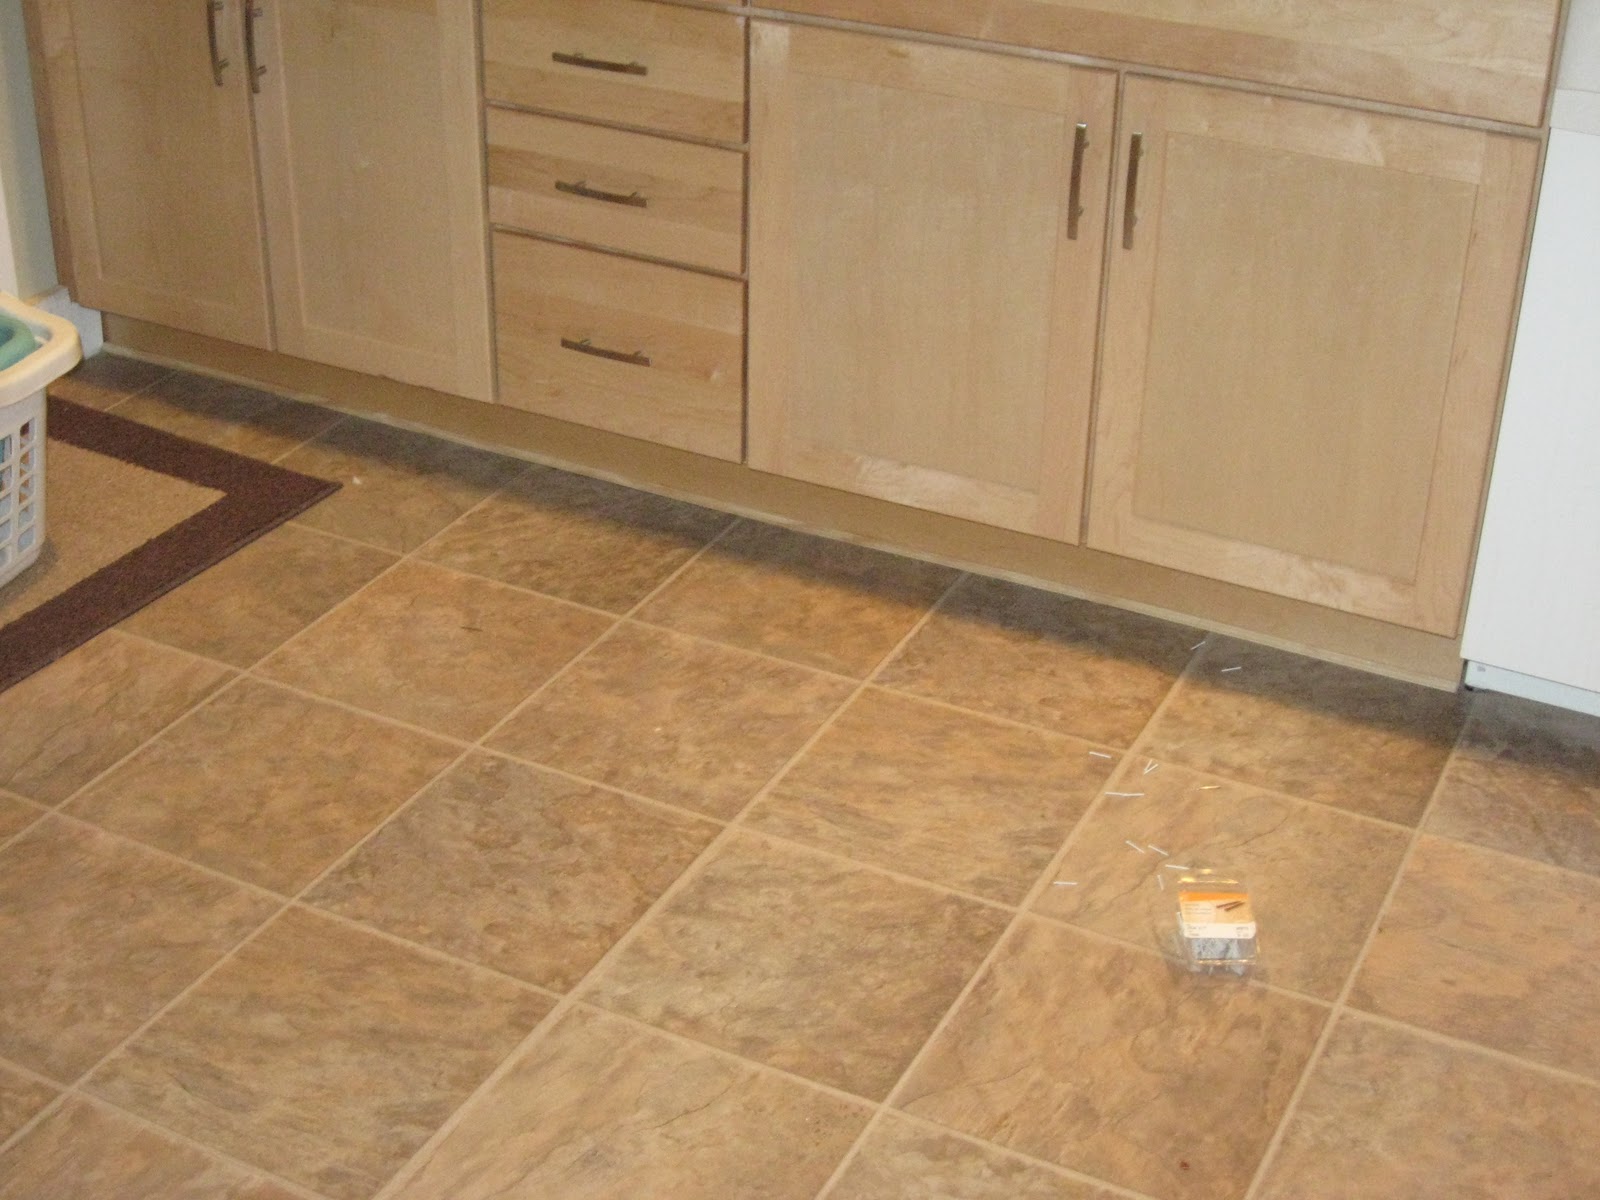 kitchen floor tile peel and stick photo - 4